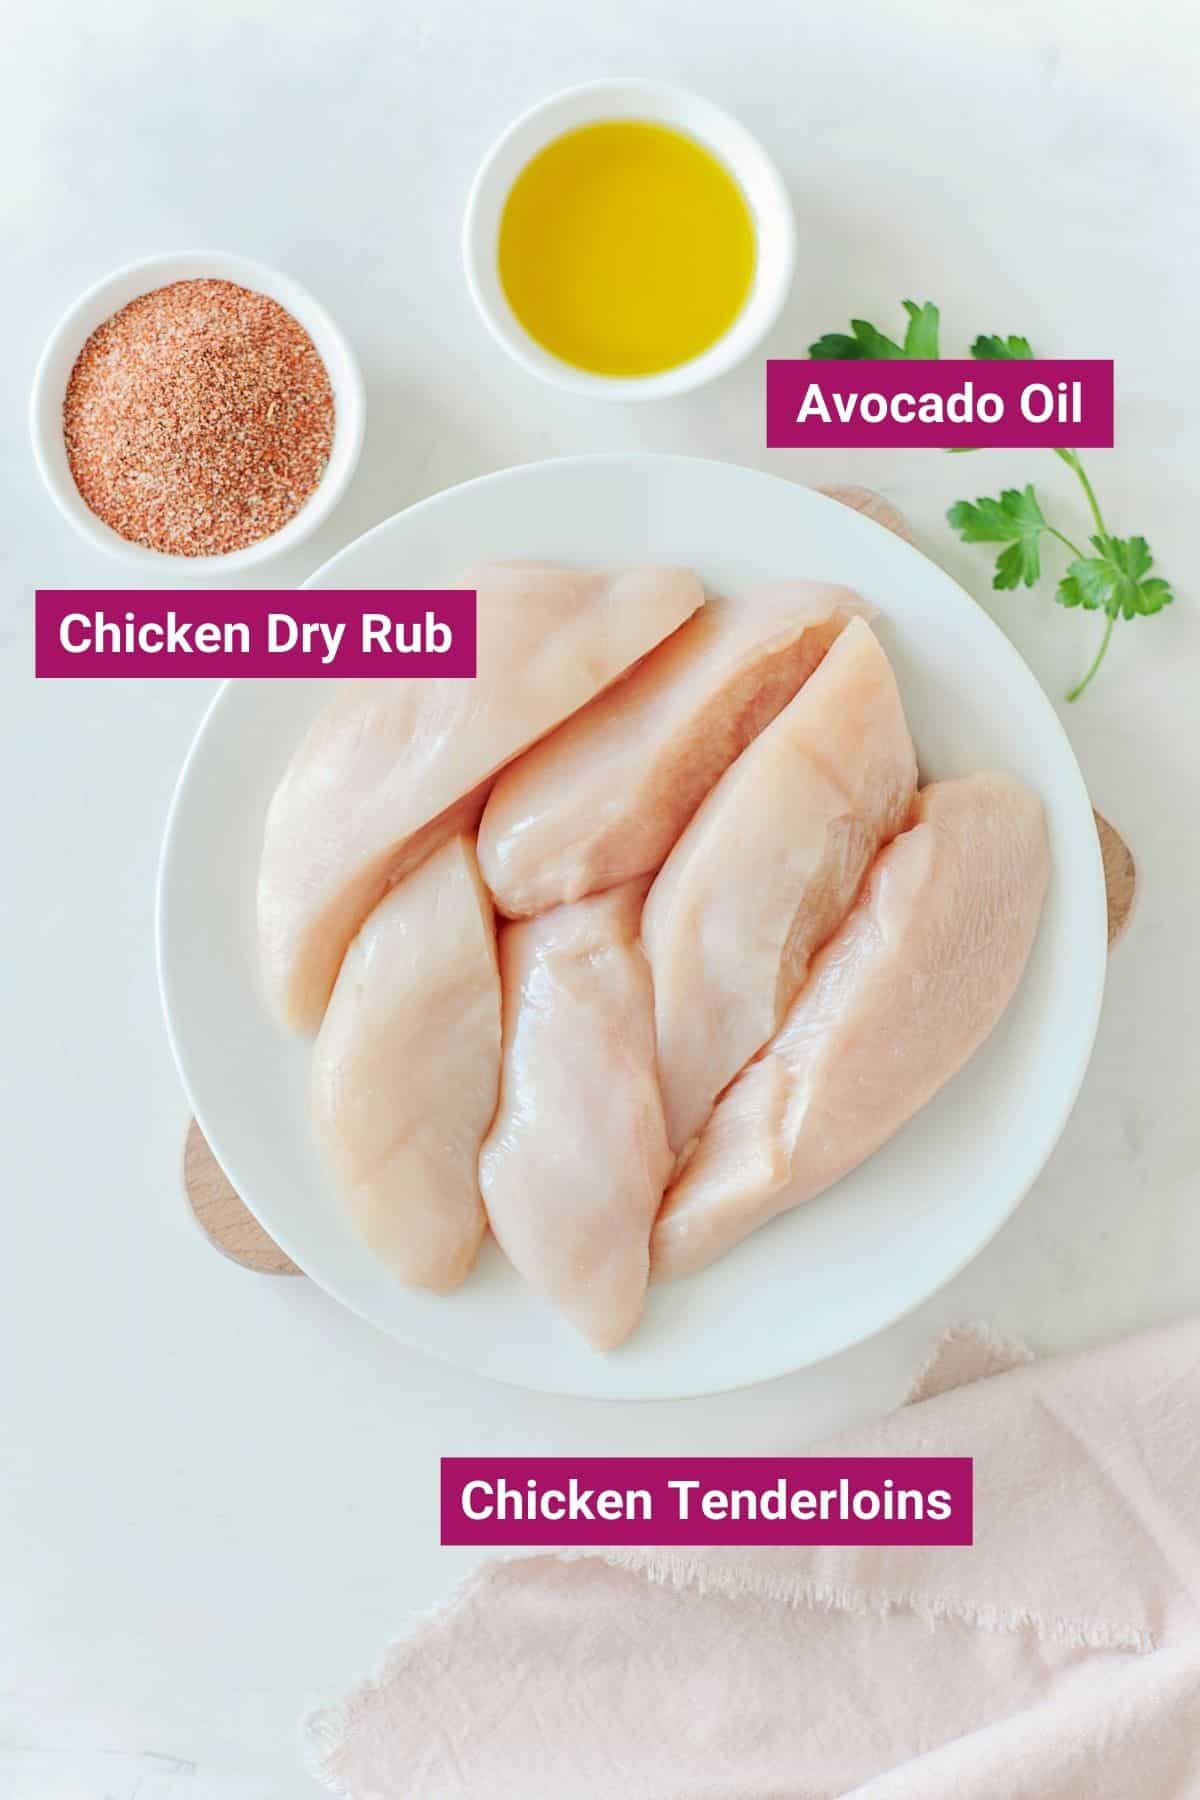 ingredients needed to make air fryer chicken tenderloins: avocado oil and chicken dry rub on small bowls and chicken tenderloins on a large plate